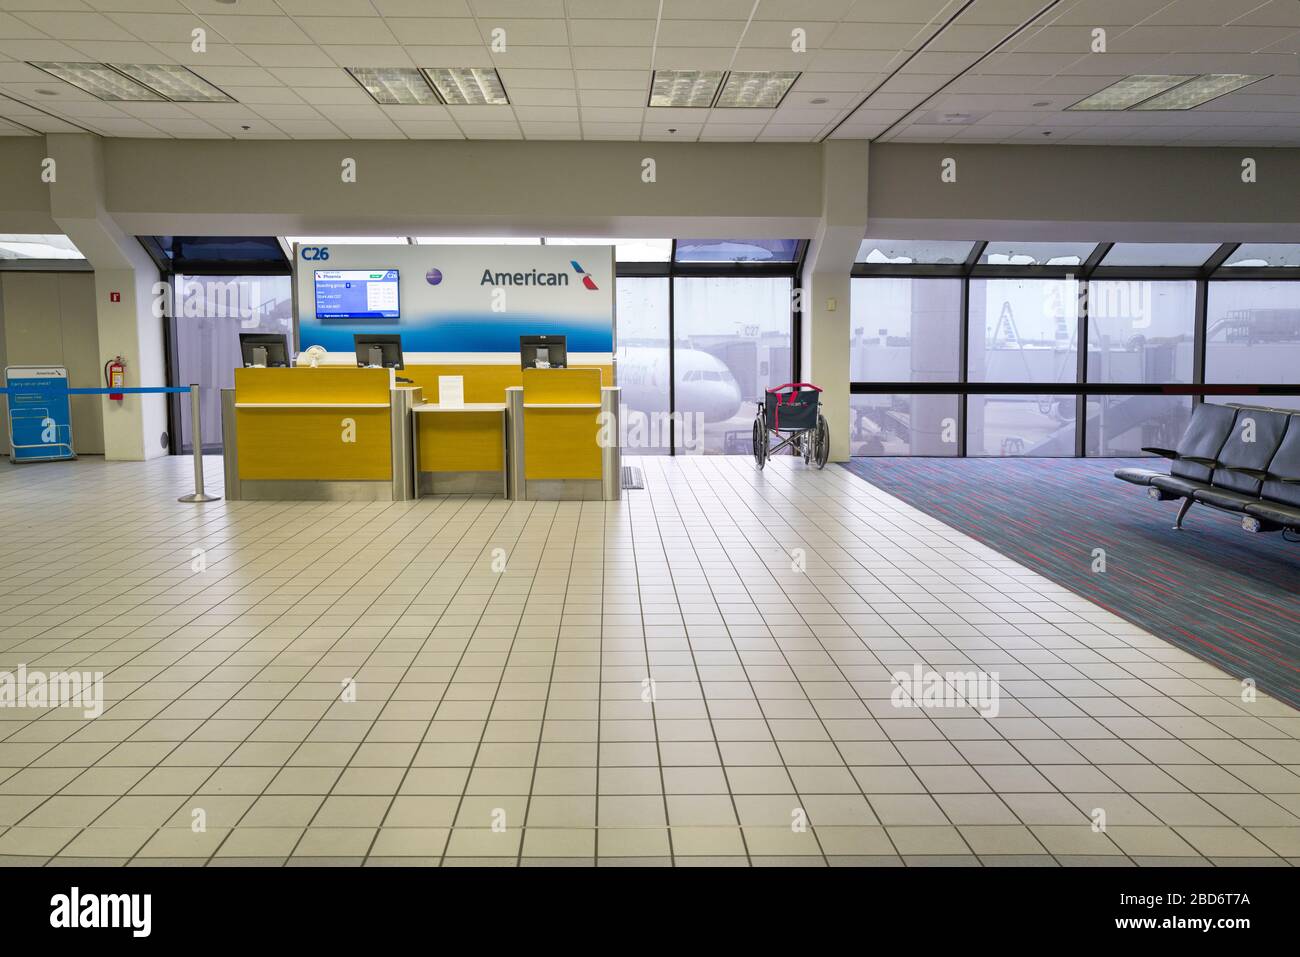 Dallas Forth Worth International Airport, American Airlines Ankunft/Abflug Gate ist leer wegen der Coronavirus COVID-19 Pandemie Stornierungen. Stockfoto